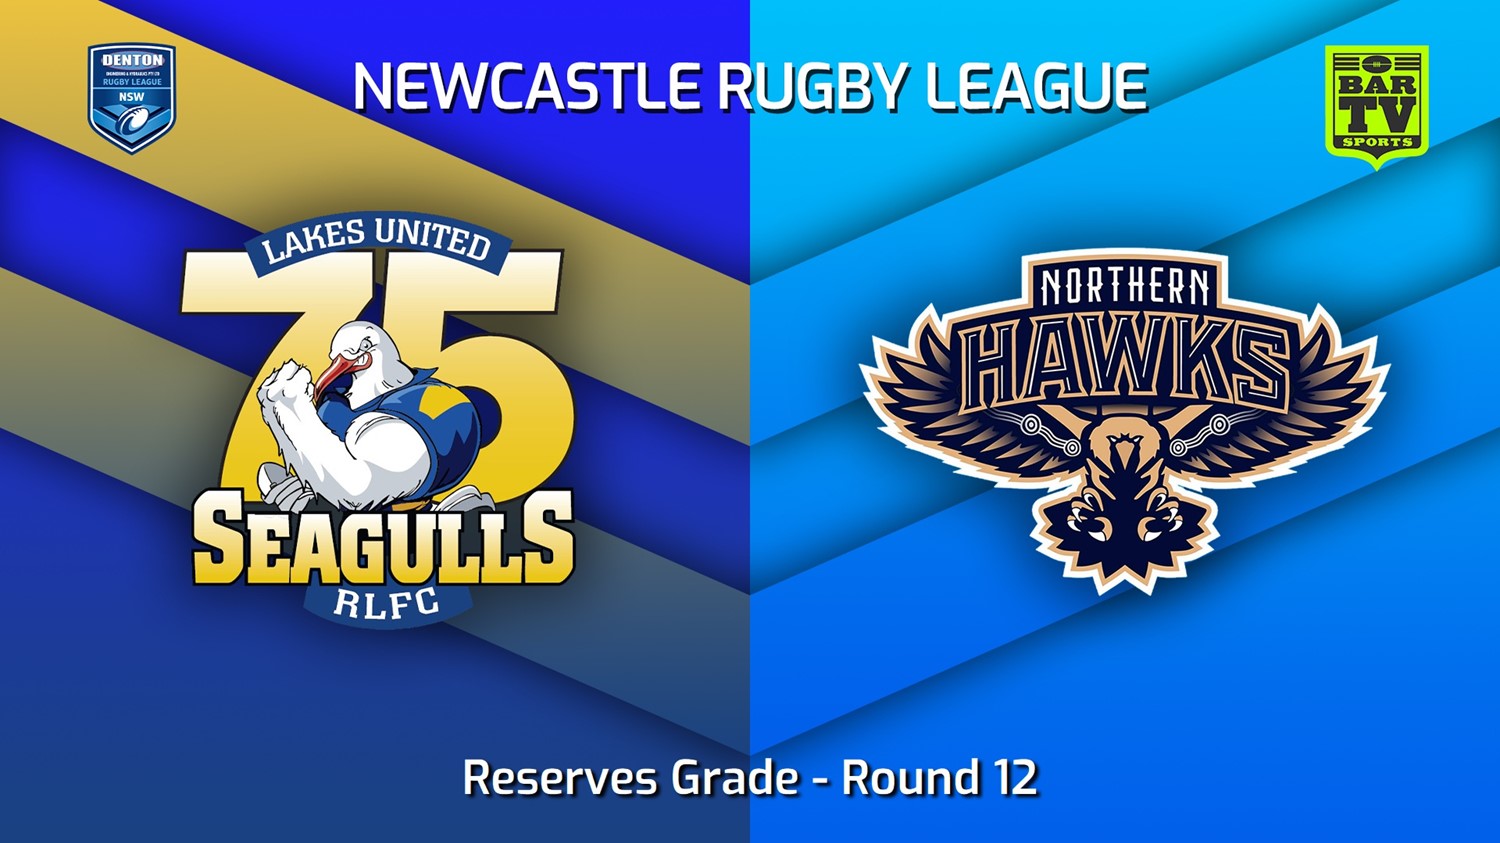 220619-Newcastle Round 12 - Reserves Grade - Lakes United v Northern Hawks Slate Image